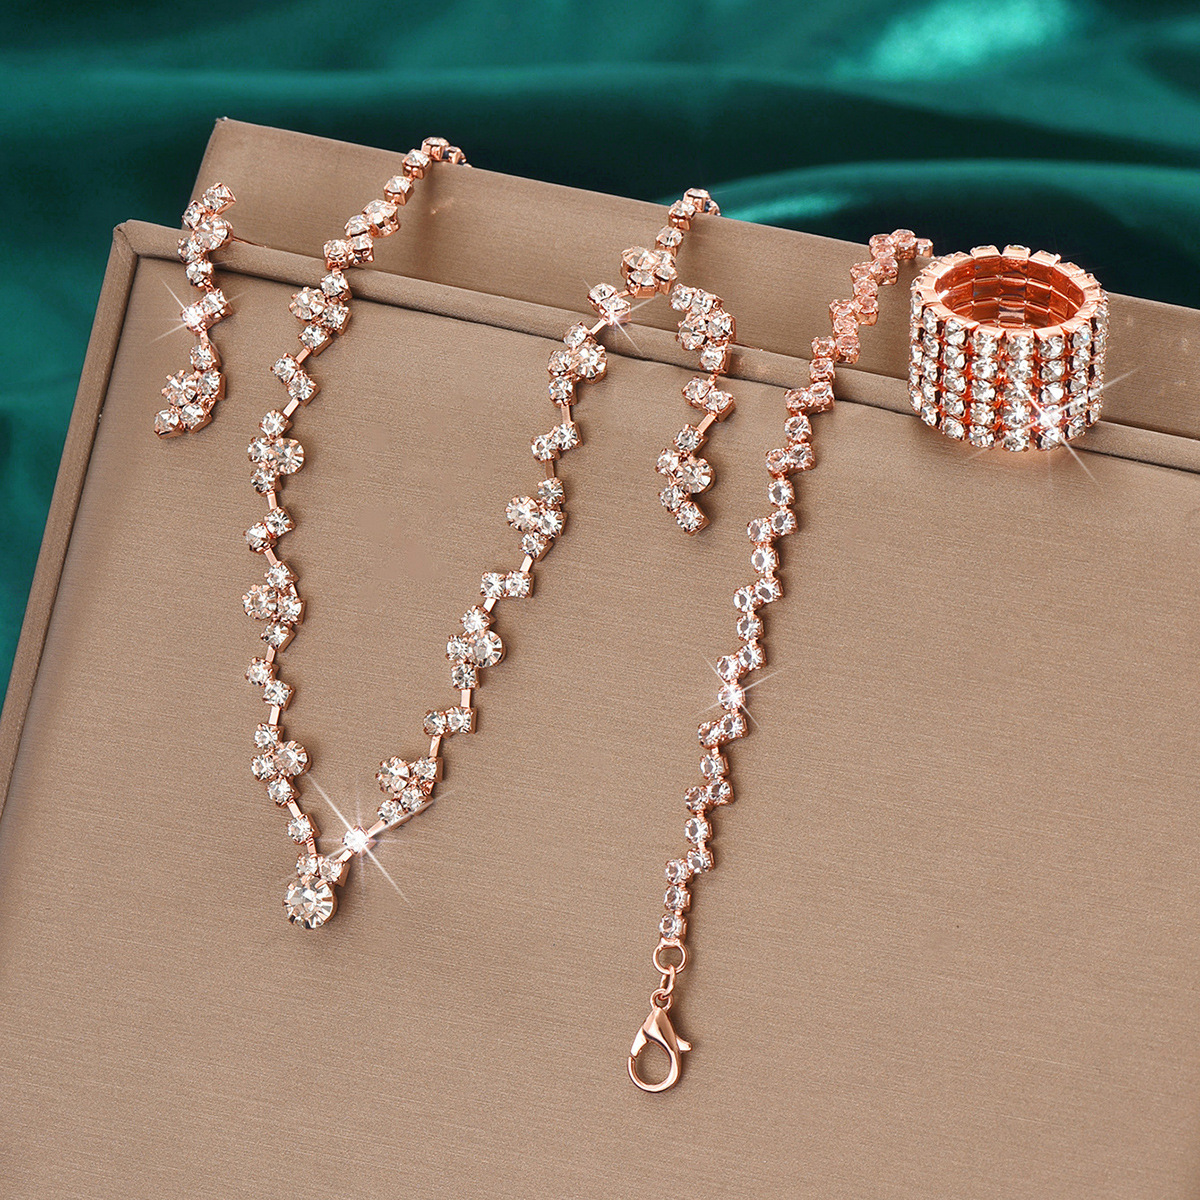 424785424-5 Rose gold necklace earrings bracelet ring set